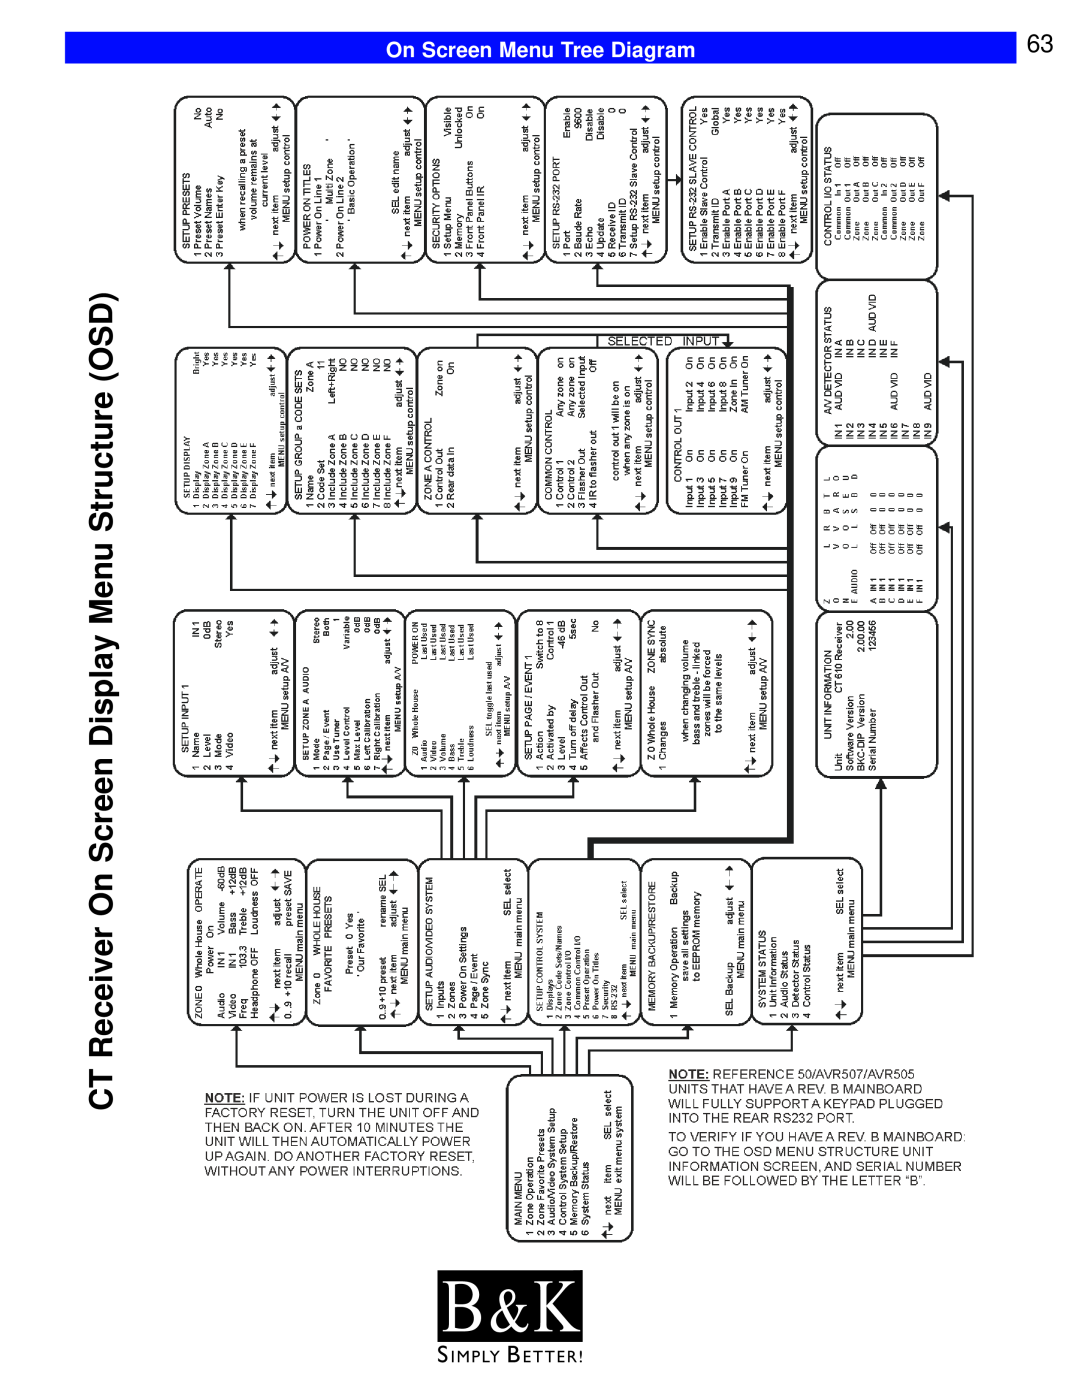 B&K CT310, CT600, CT602, CT610, CT300 CT Receiver On Screen Display Menu Structure OSD, B & K, On Screen Menu Tree Diagram 